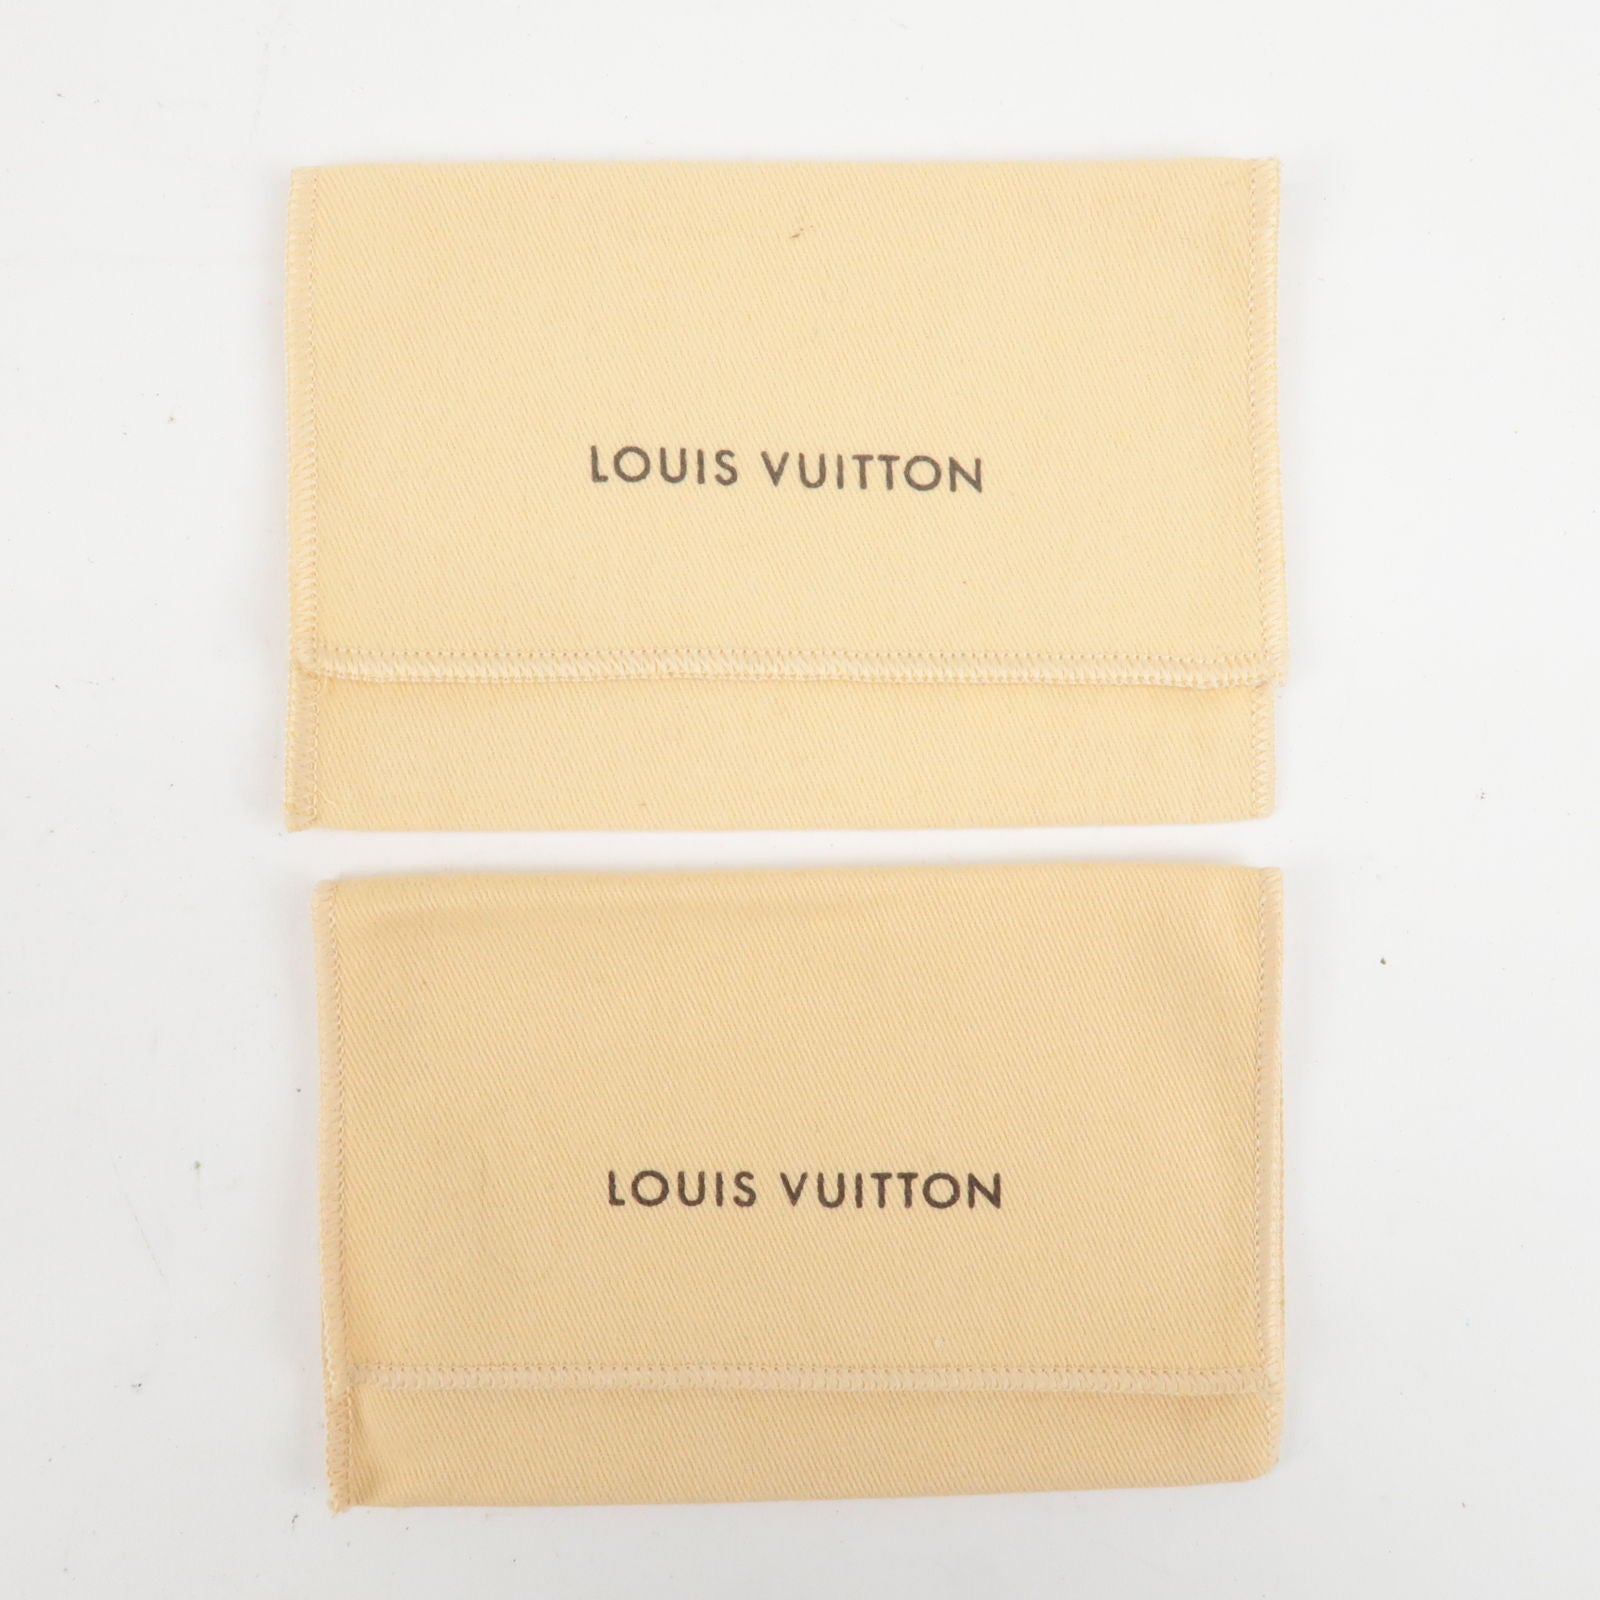 Louis Vuitton wallet dustbag  Louis vuitton wallet, Louis vuitton, Vuitton